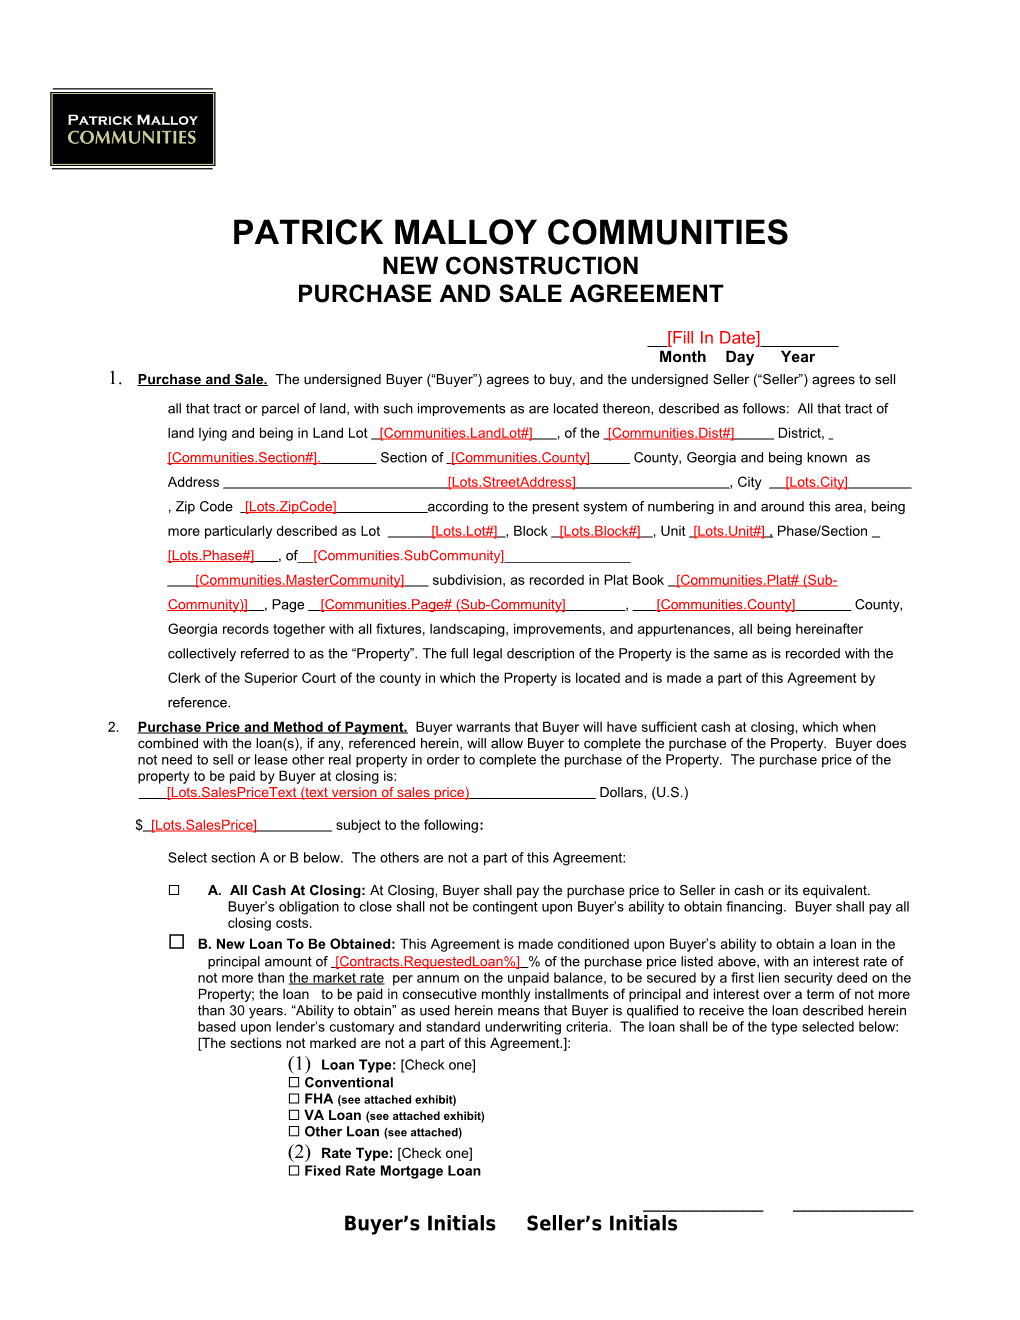 Patrick Malloy Communities